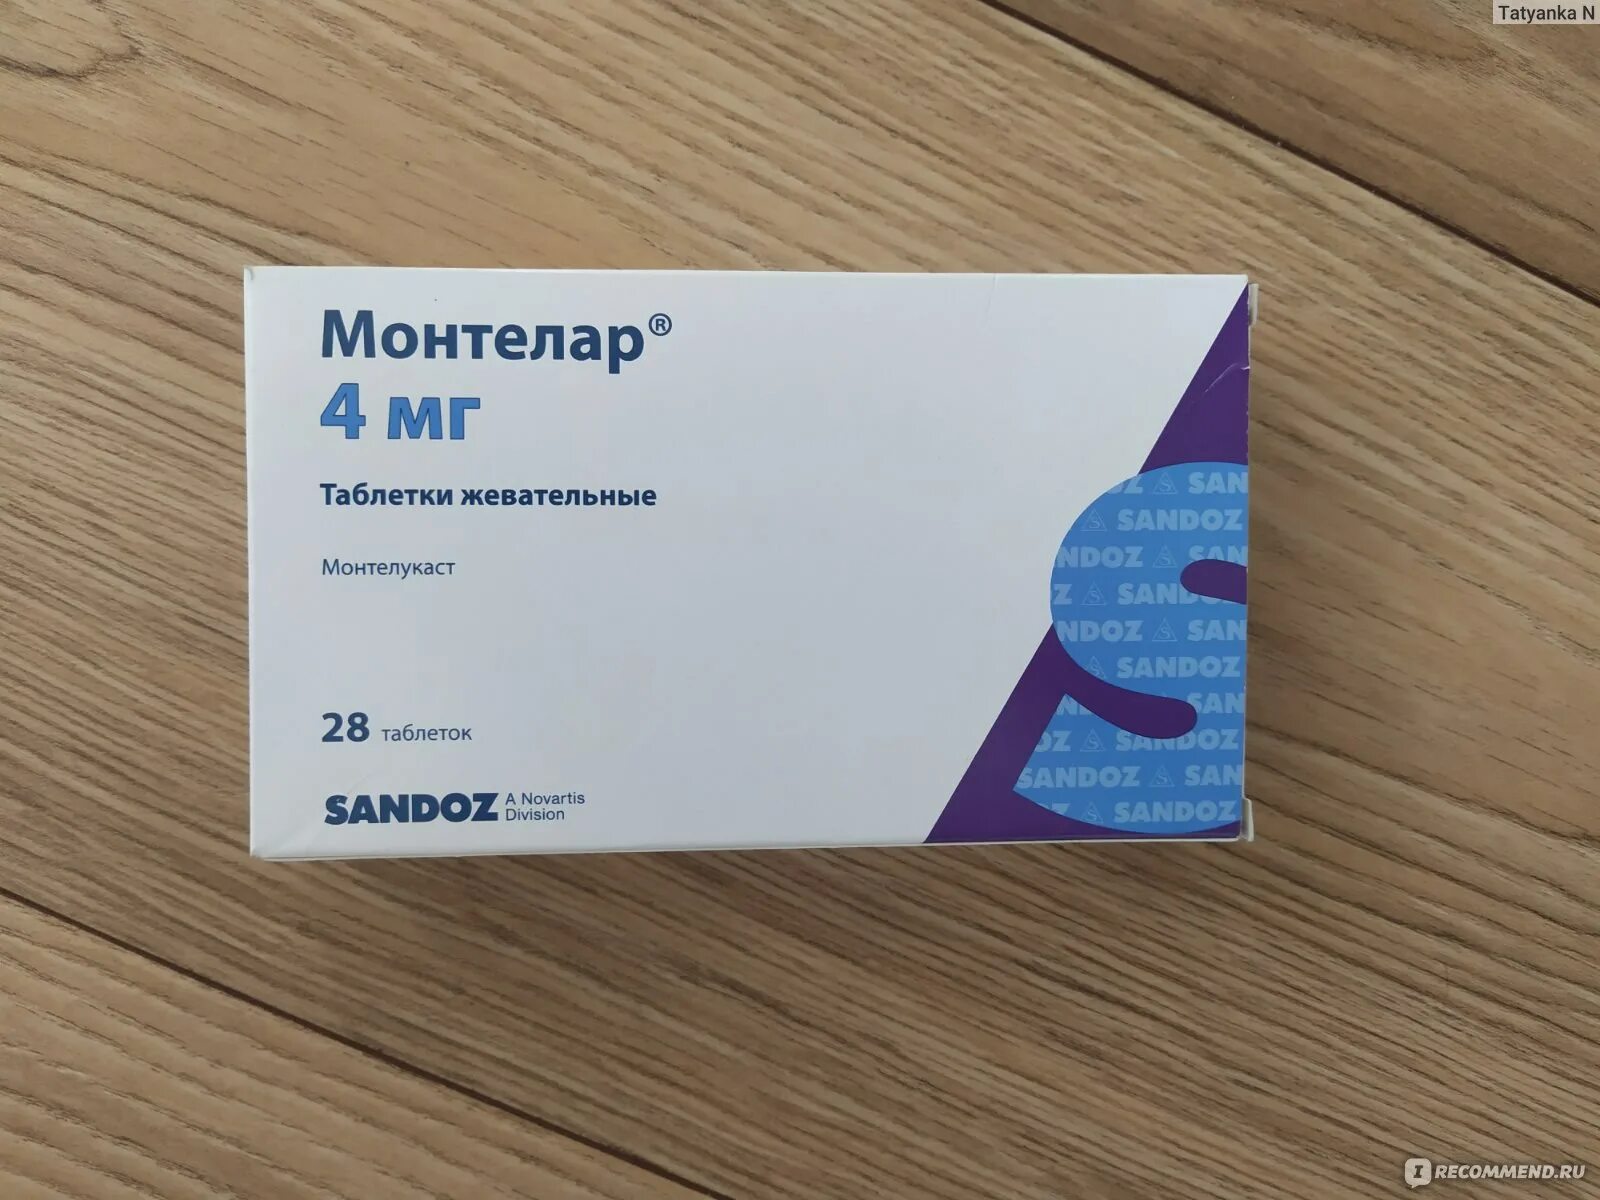 Монтелар Сандоз. Монтелар жевательные таблетки 4 мг. Монтелукаст монтелар. Сингуляр монтелар. Монтелар 10 купить